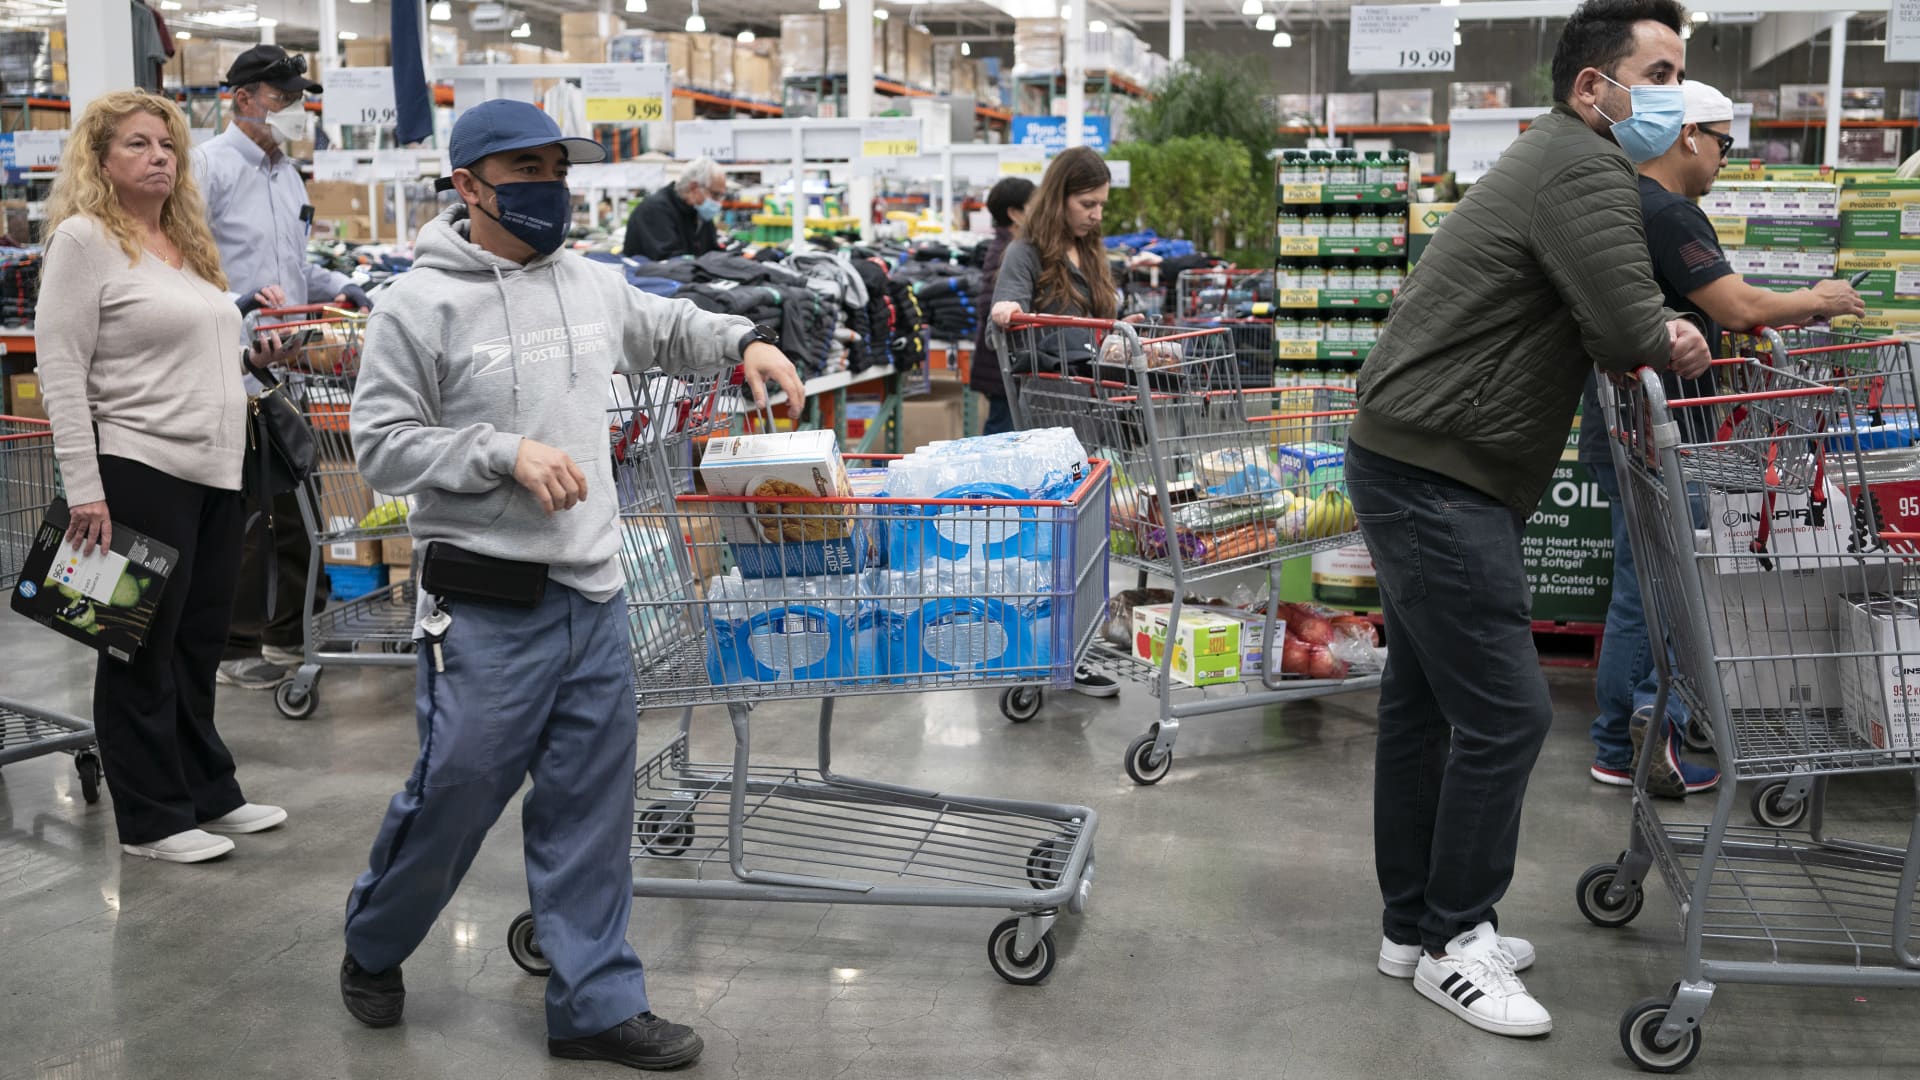 Customers pushing shopping carts shop at a supermarket on April 12, 2022 in San Mateo County, California.